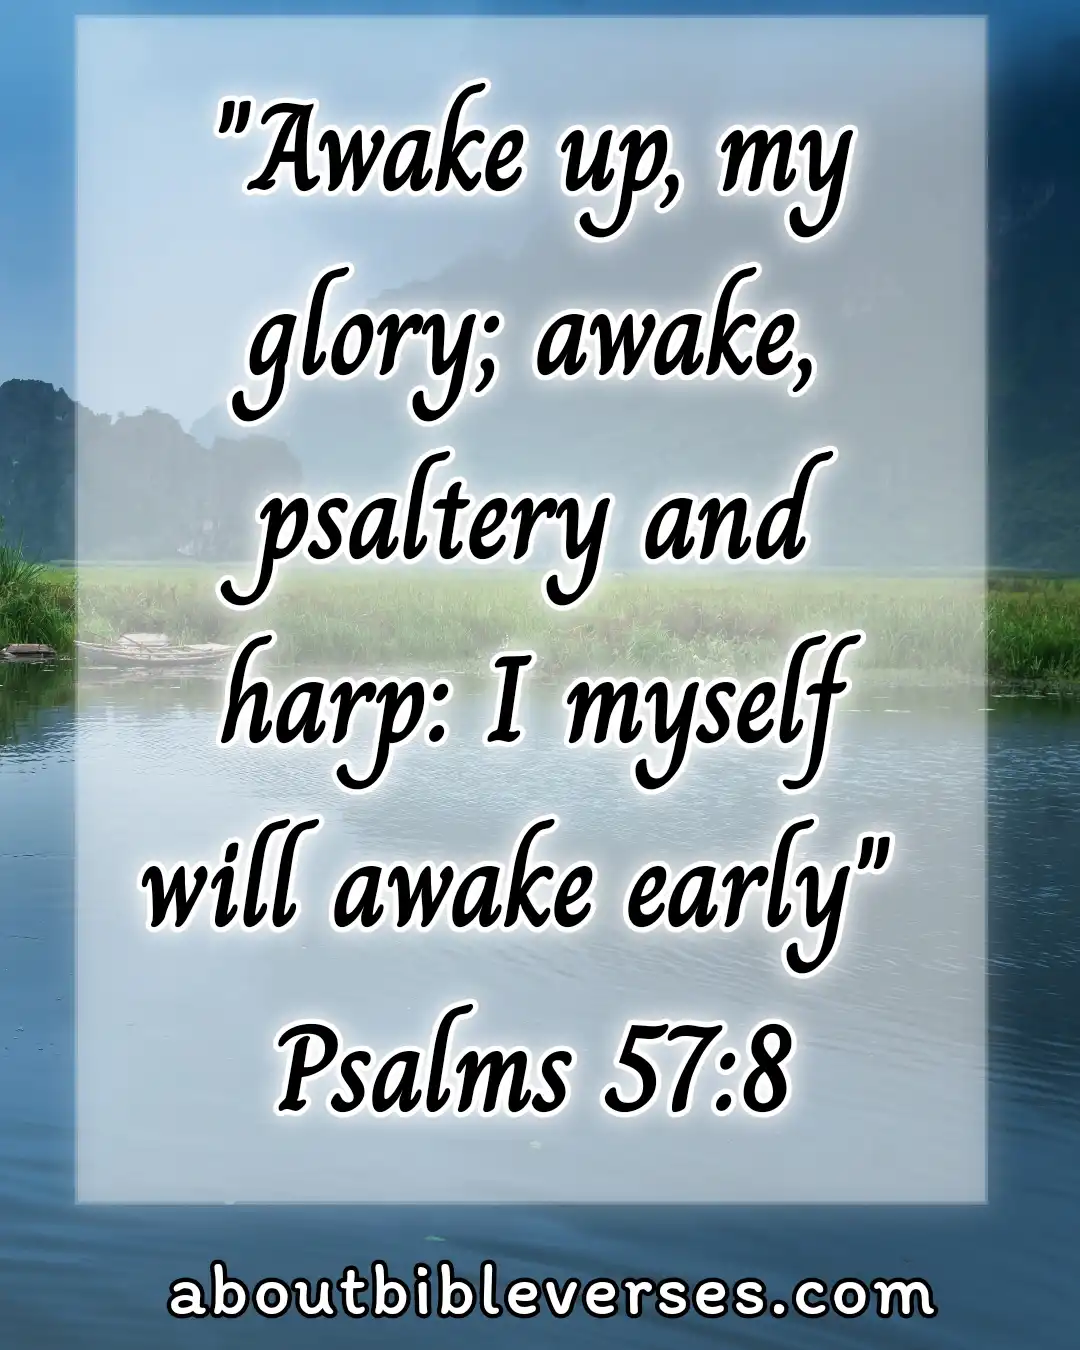 Good morning bible verses (Psalm 57:8)